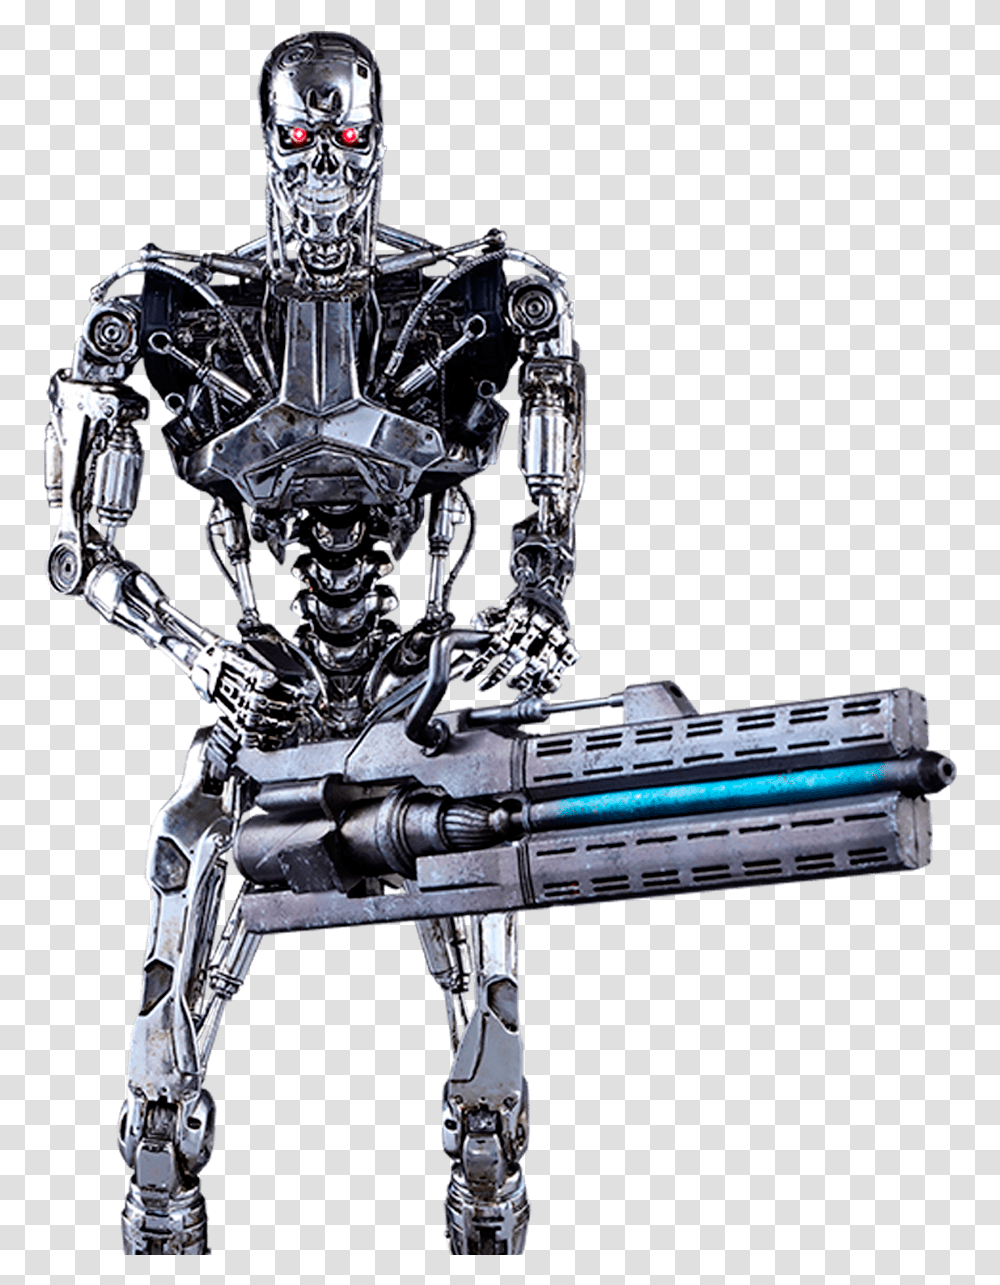 The Terminator 7 Image Terminator, Gun, Weapon, Weaponry, Robot Transparent Png